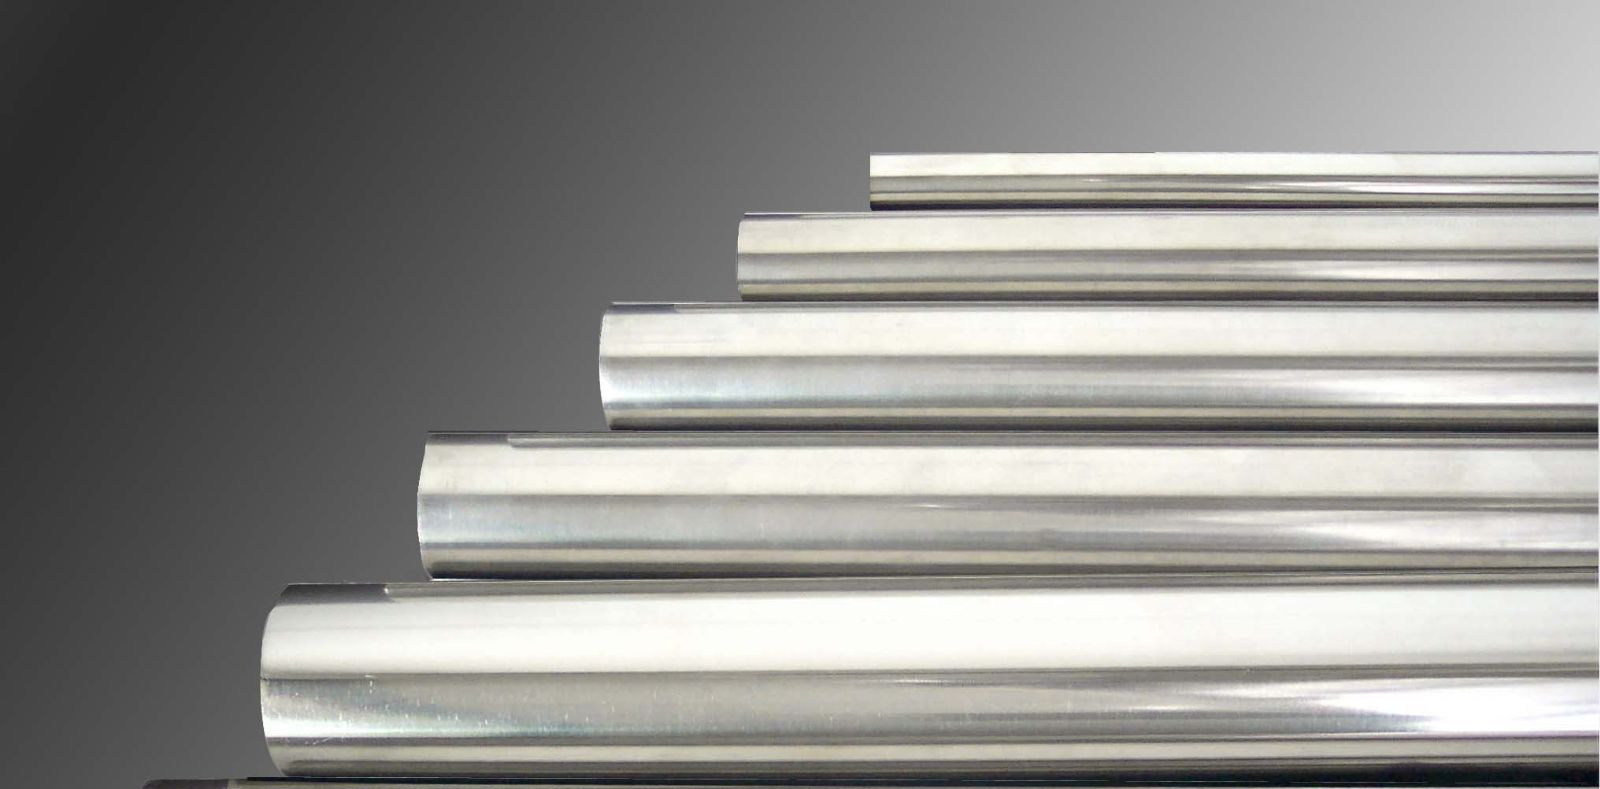 Steel base inlaid graphite self-lubricating bearing metarical